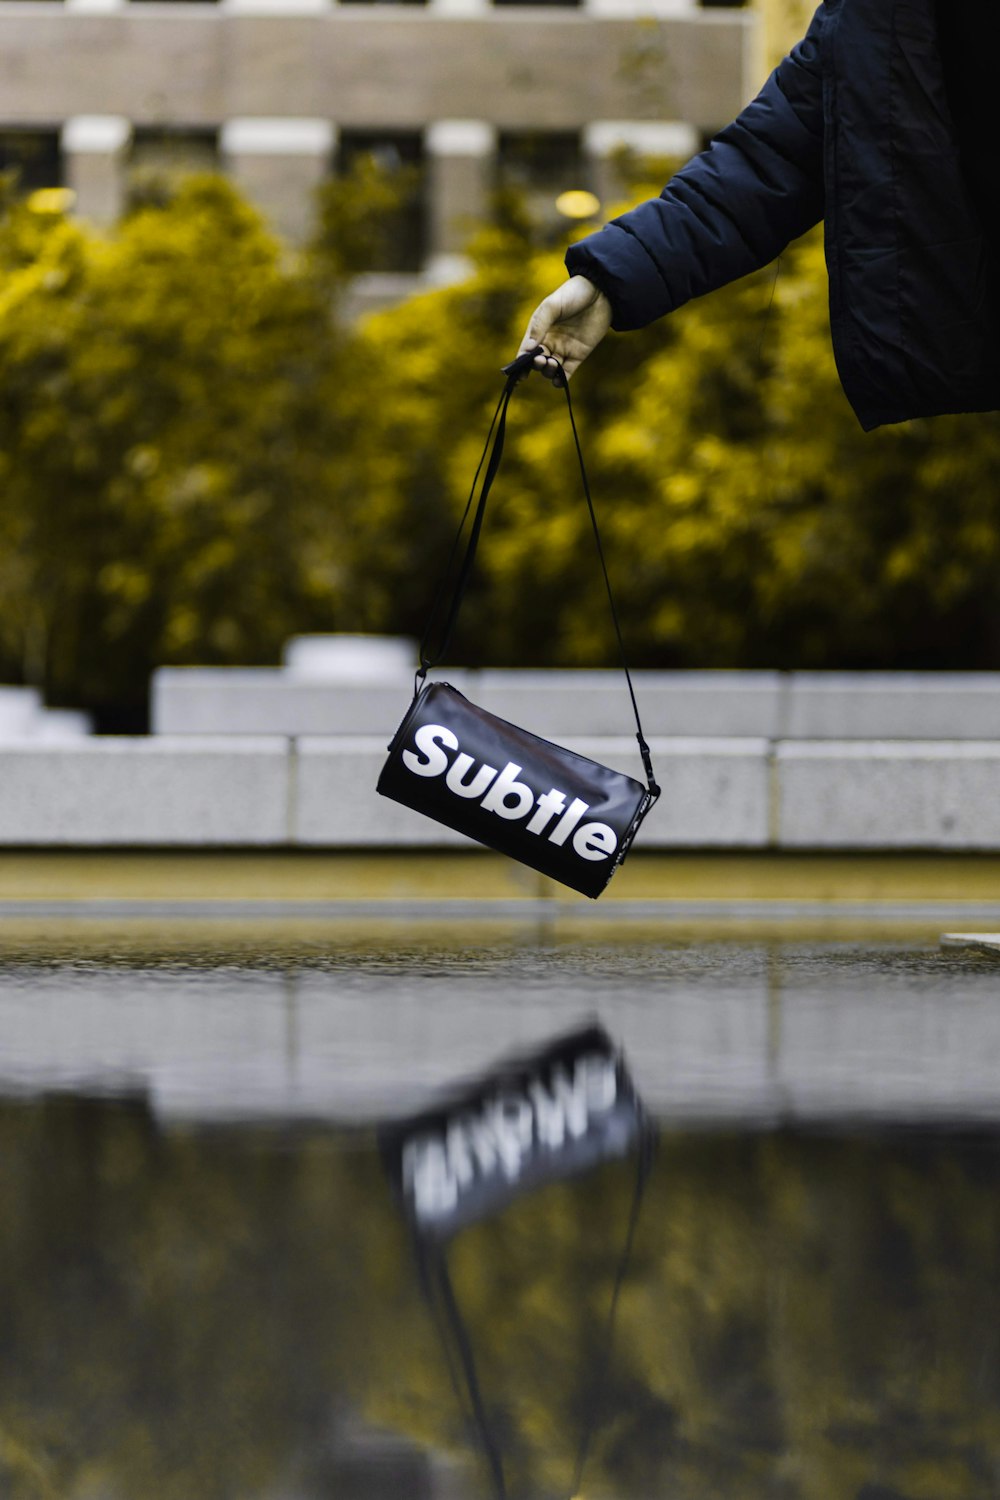 Una persona sostiene una bolsa Subbie bajo la lluvia